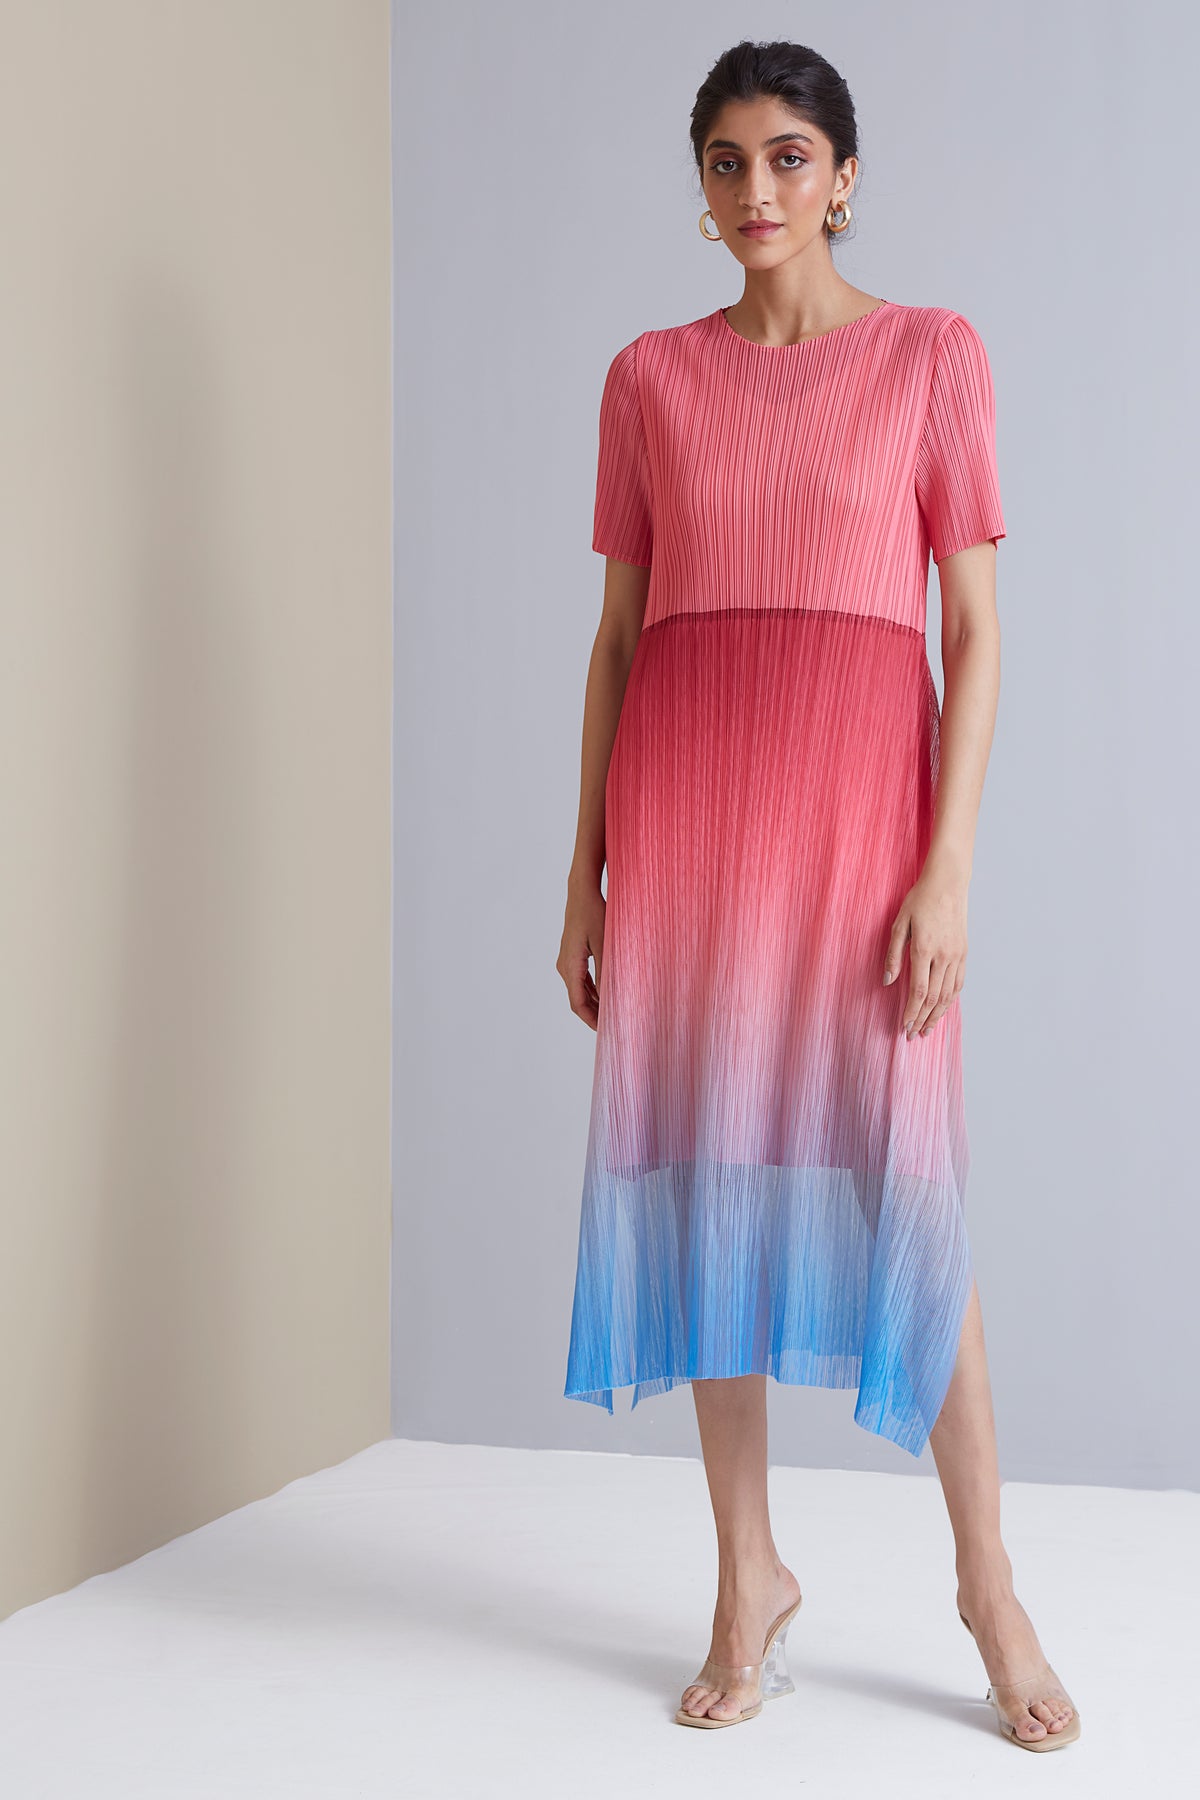 Leanna Layer Dress - Pink Blue